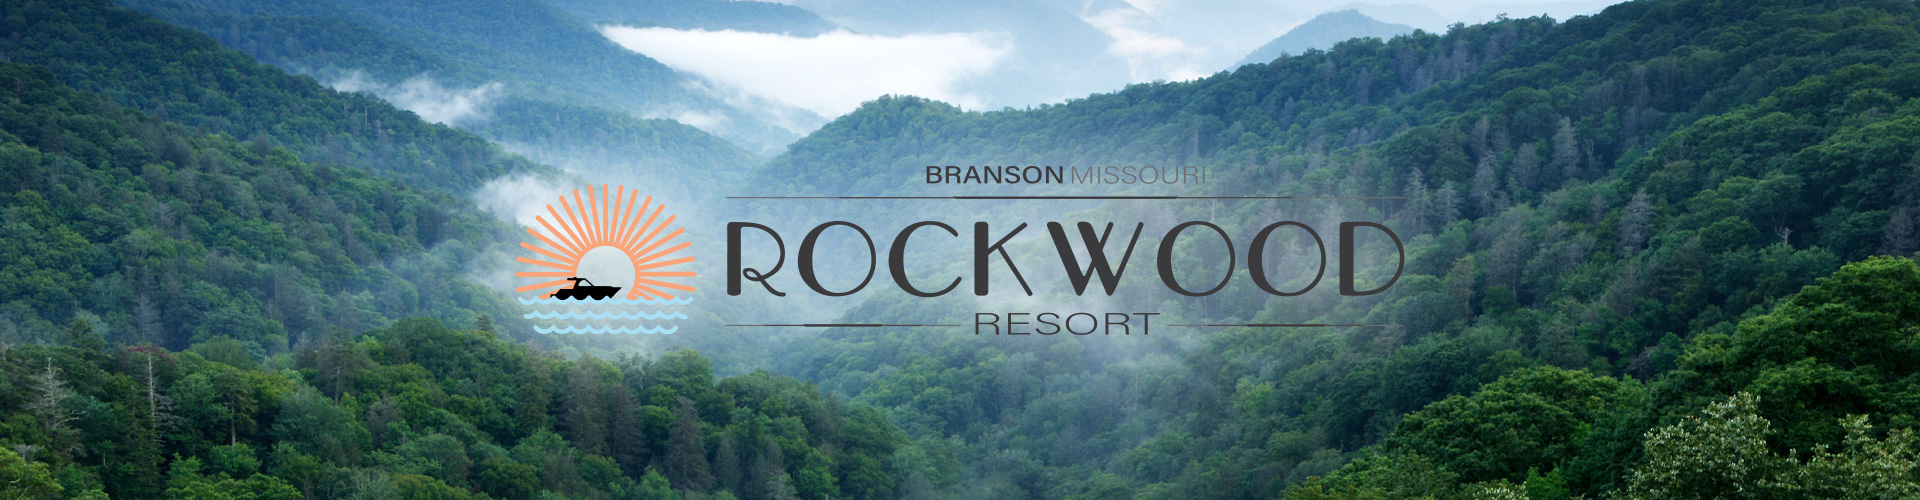 Rockwood Resorts Banner